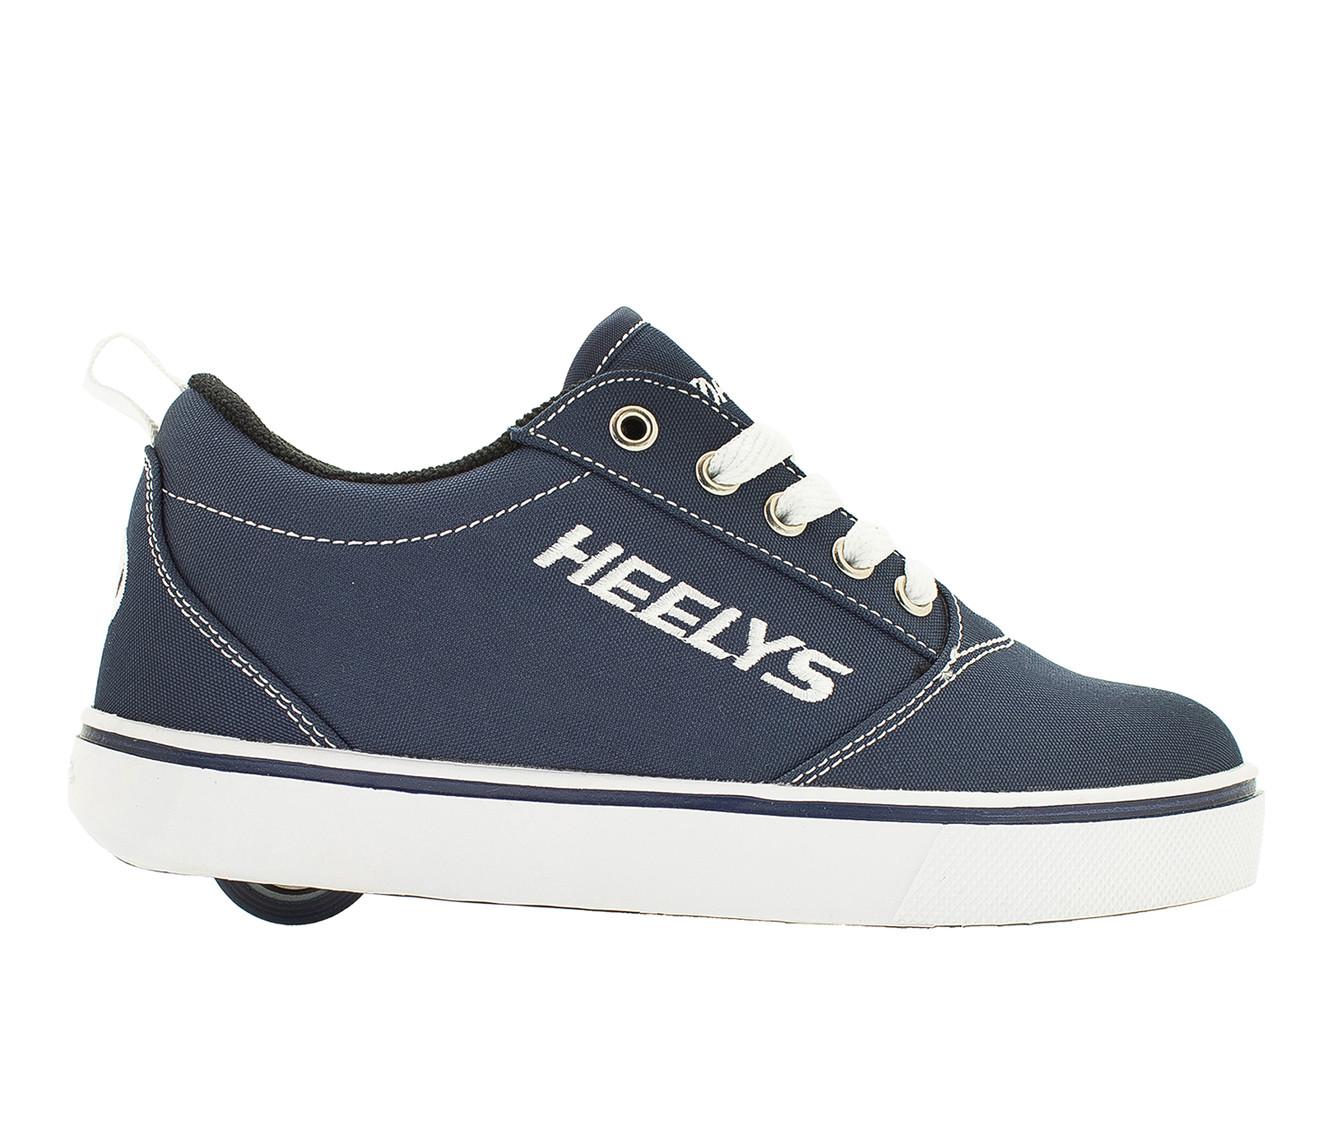 Men's Heelys Pro 20 Skate Shoes